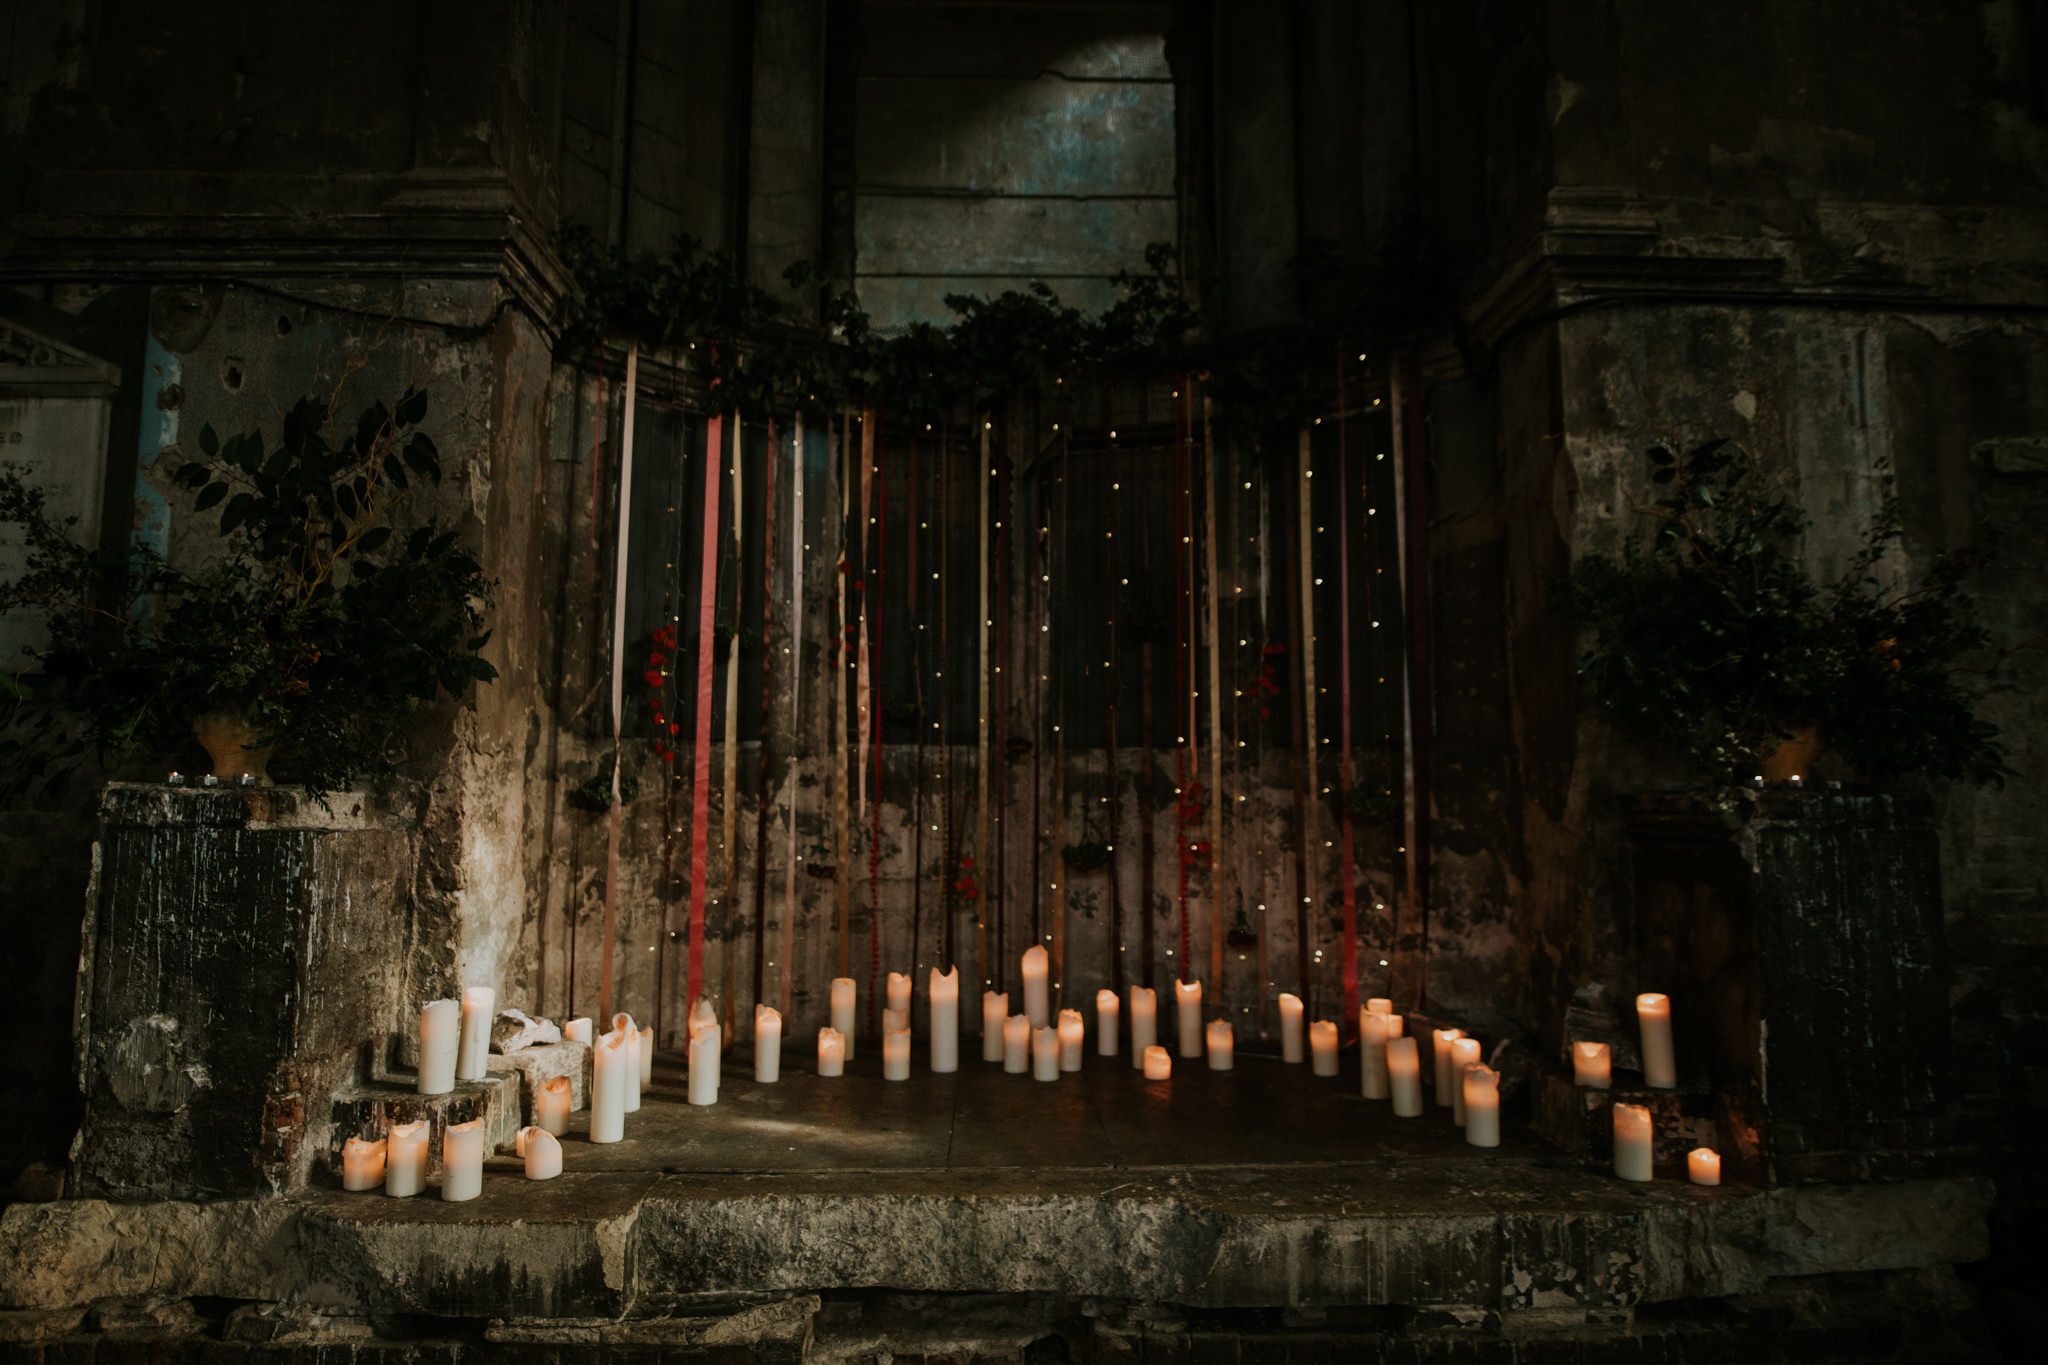 Lit candles at the Asylum Chalpel in Pechkam, London